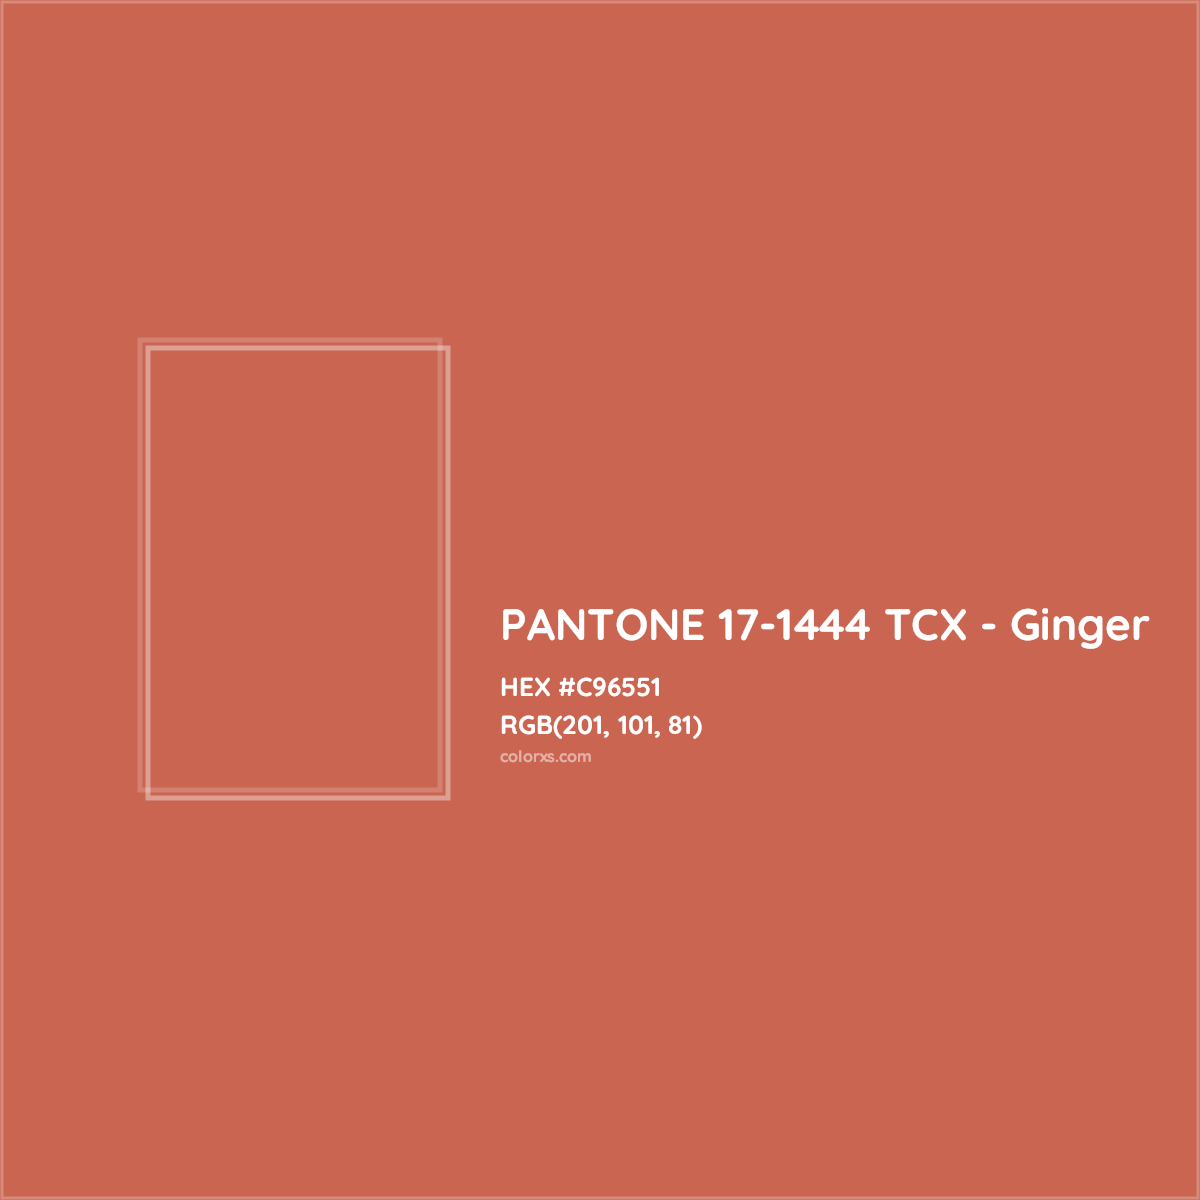 HEX #C96551 PANTONE 17-1444 TCX - Ginger CMS Pantone TCX - Color Code